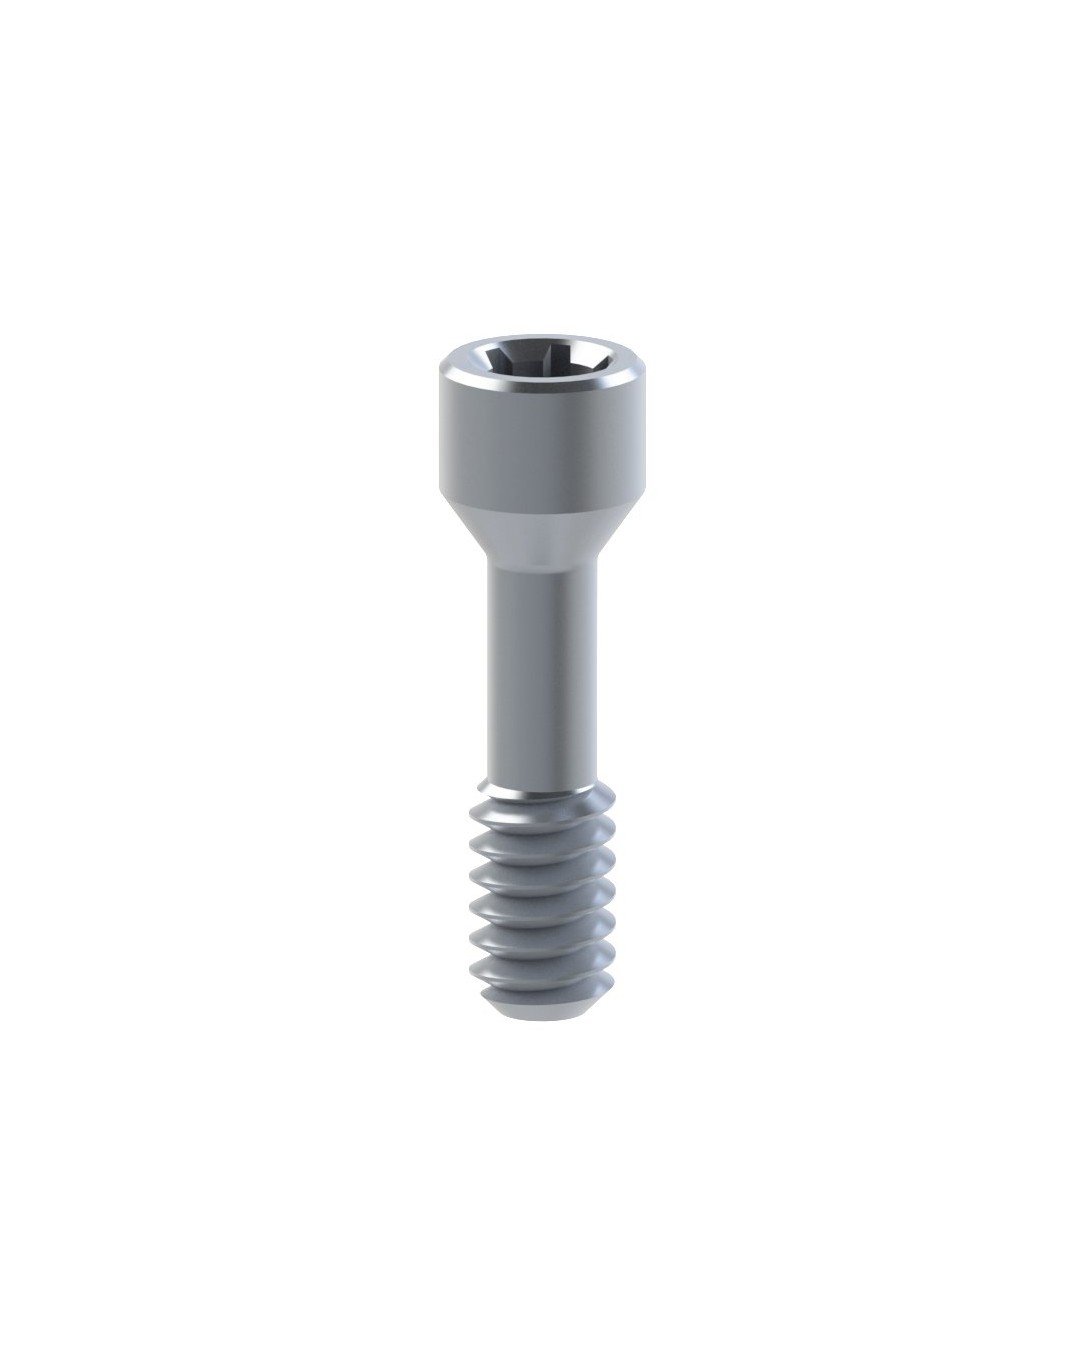 Titanium Screw compatible with Nobel Biocare® Active / Replace CC®